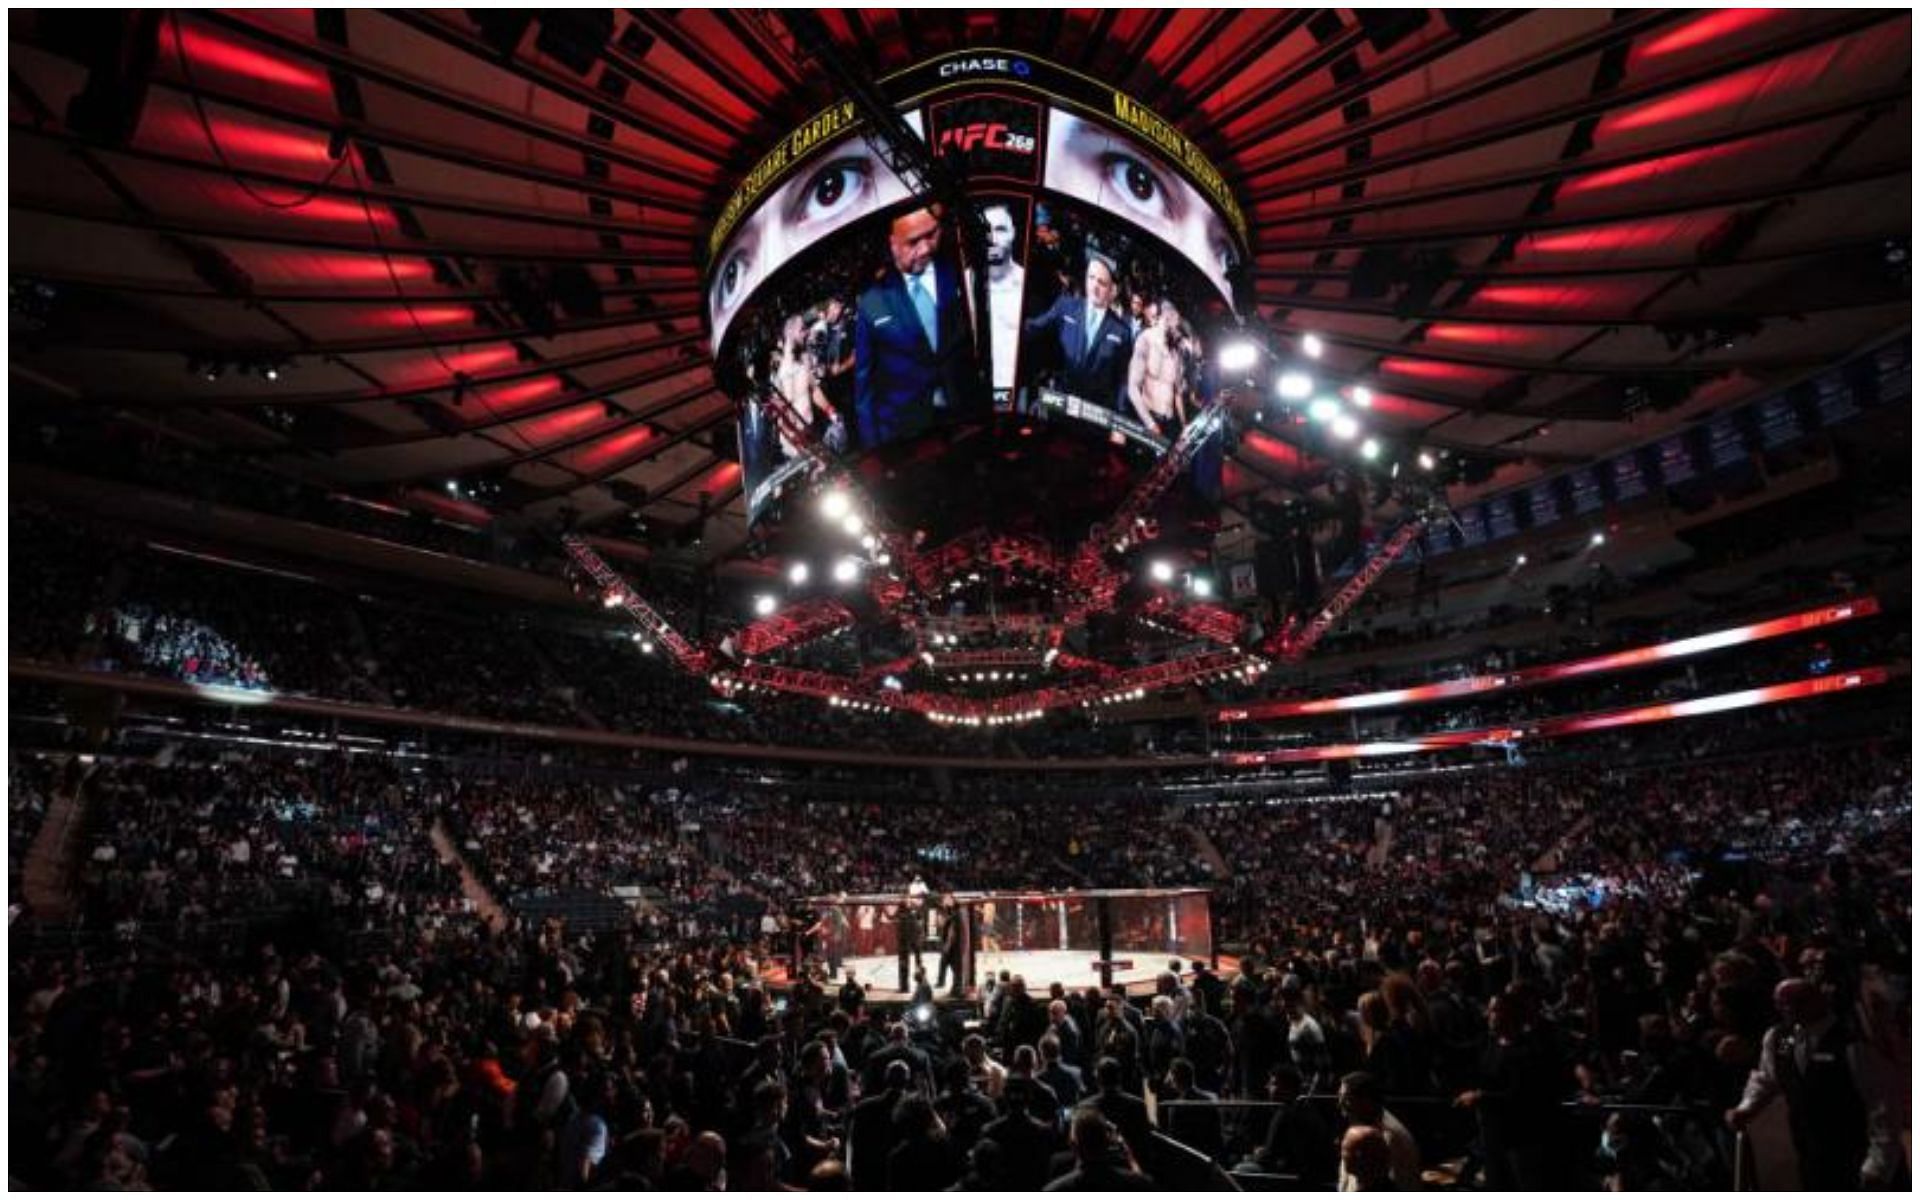 UFC event at Madison Square Garden